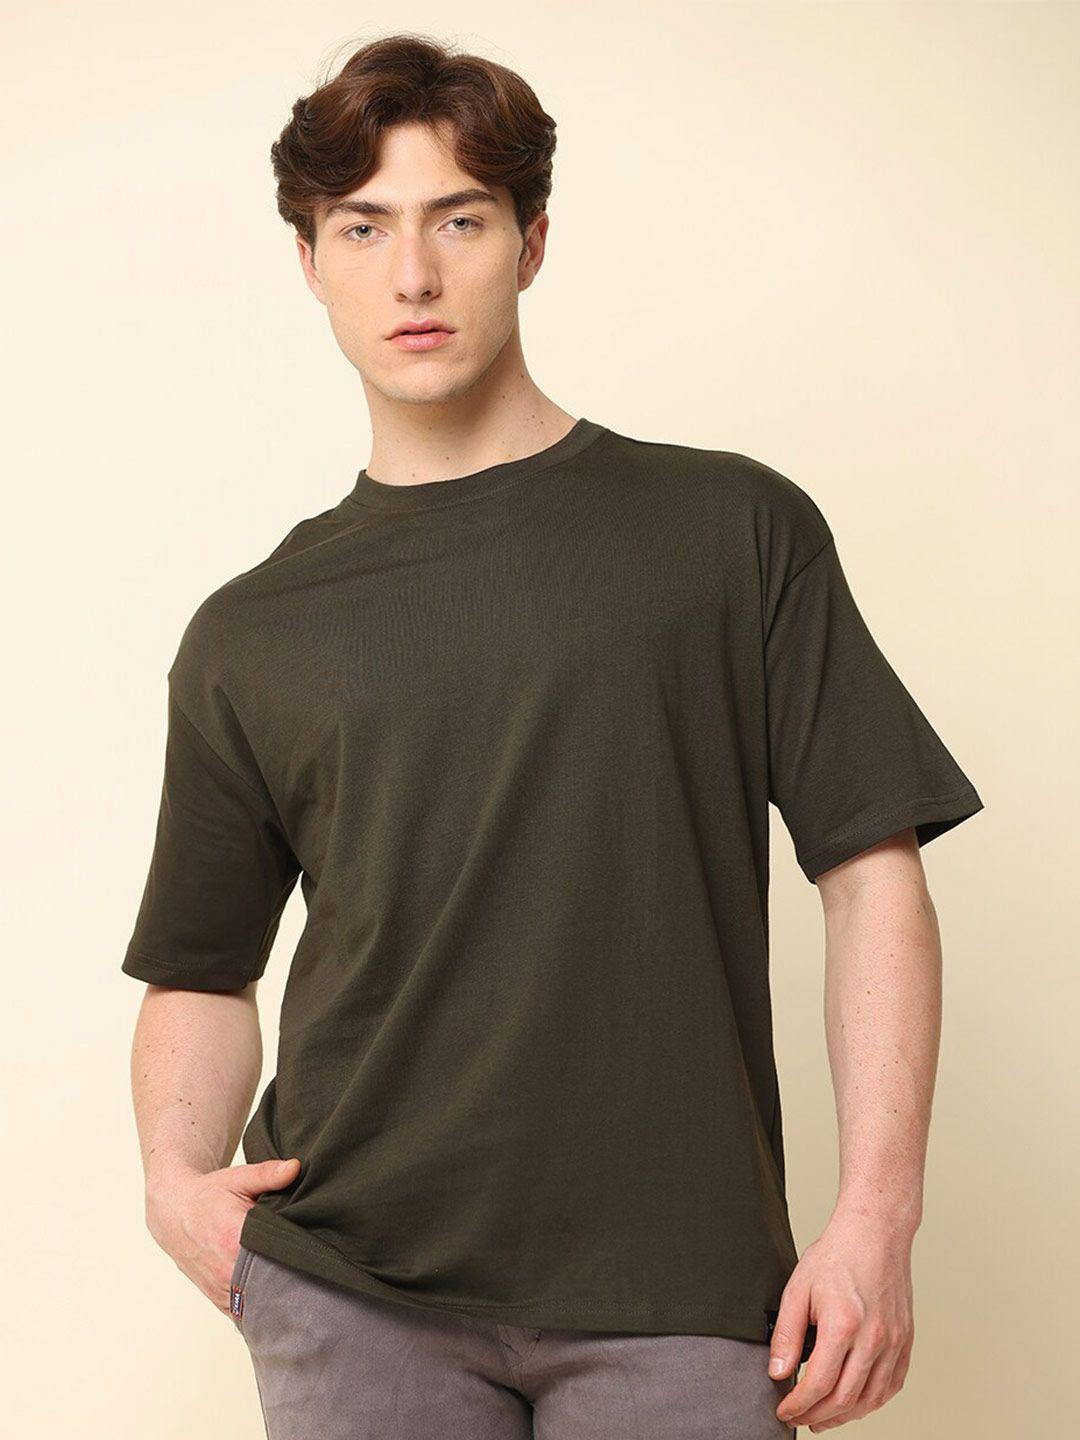 silisoul-drop-shoulder-sleeves-bio-finish-pure-cotton-oversized-t-shirt